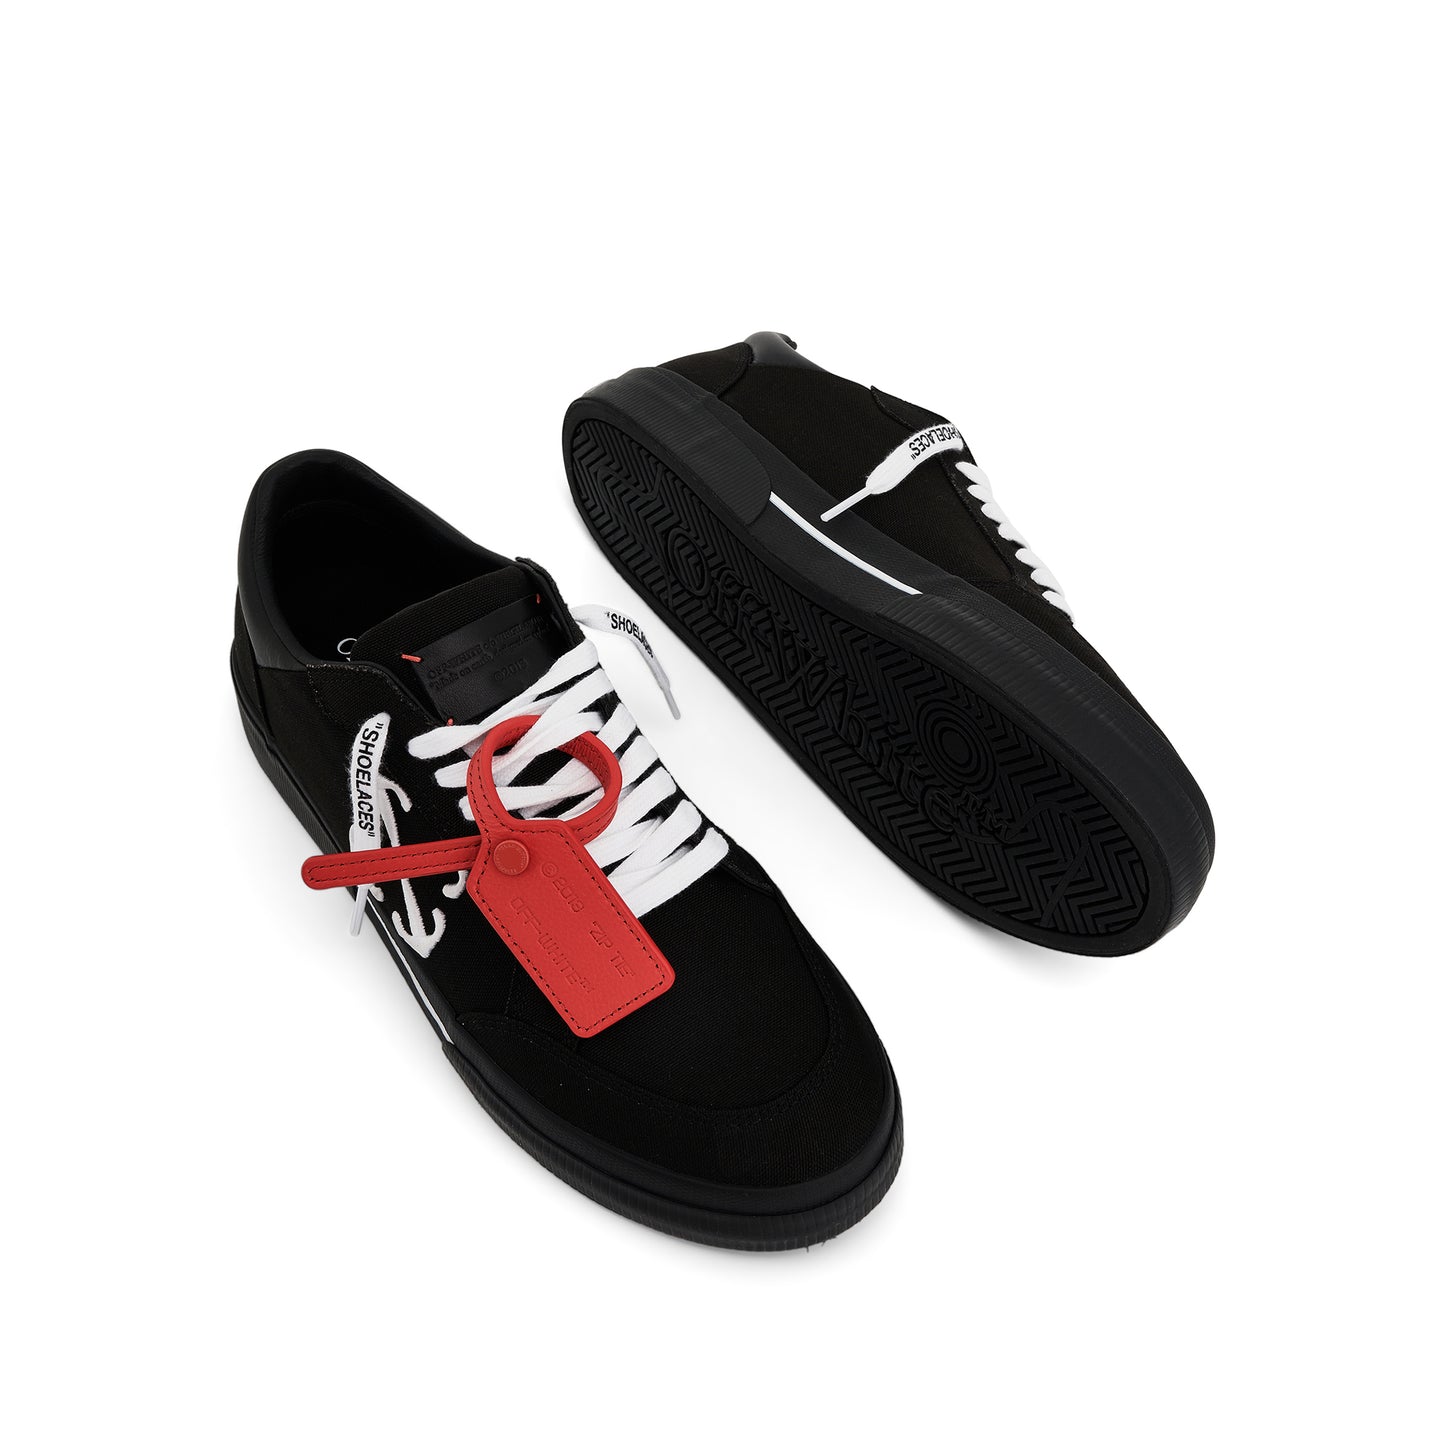 New Low Vulcanized Canvas Sneaker in Black/White